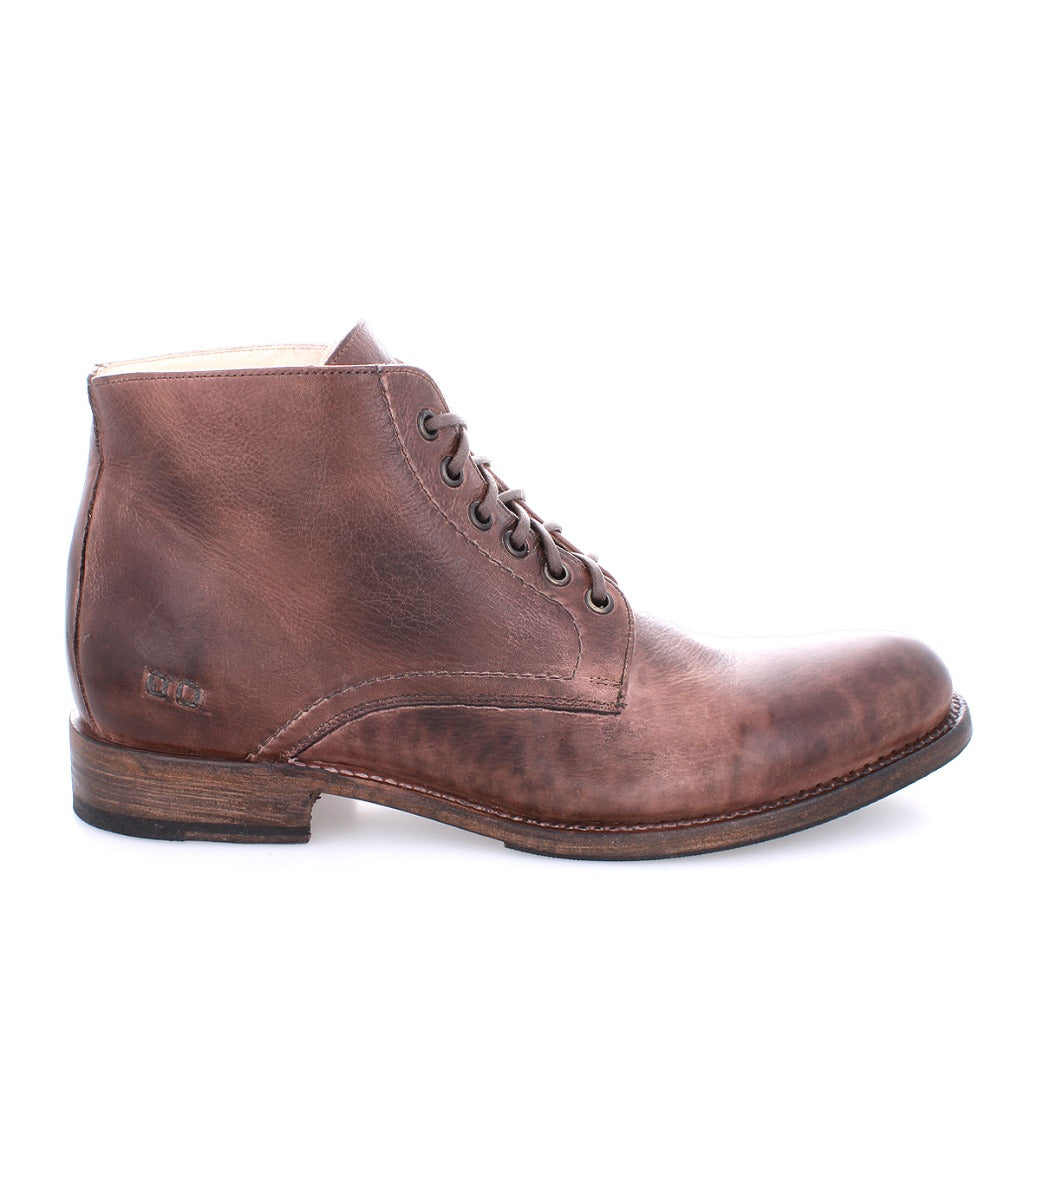 Bed Stu's Bradley men's brown leather chukka boots.